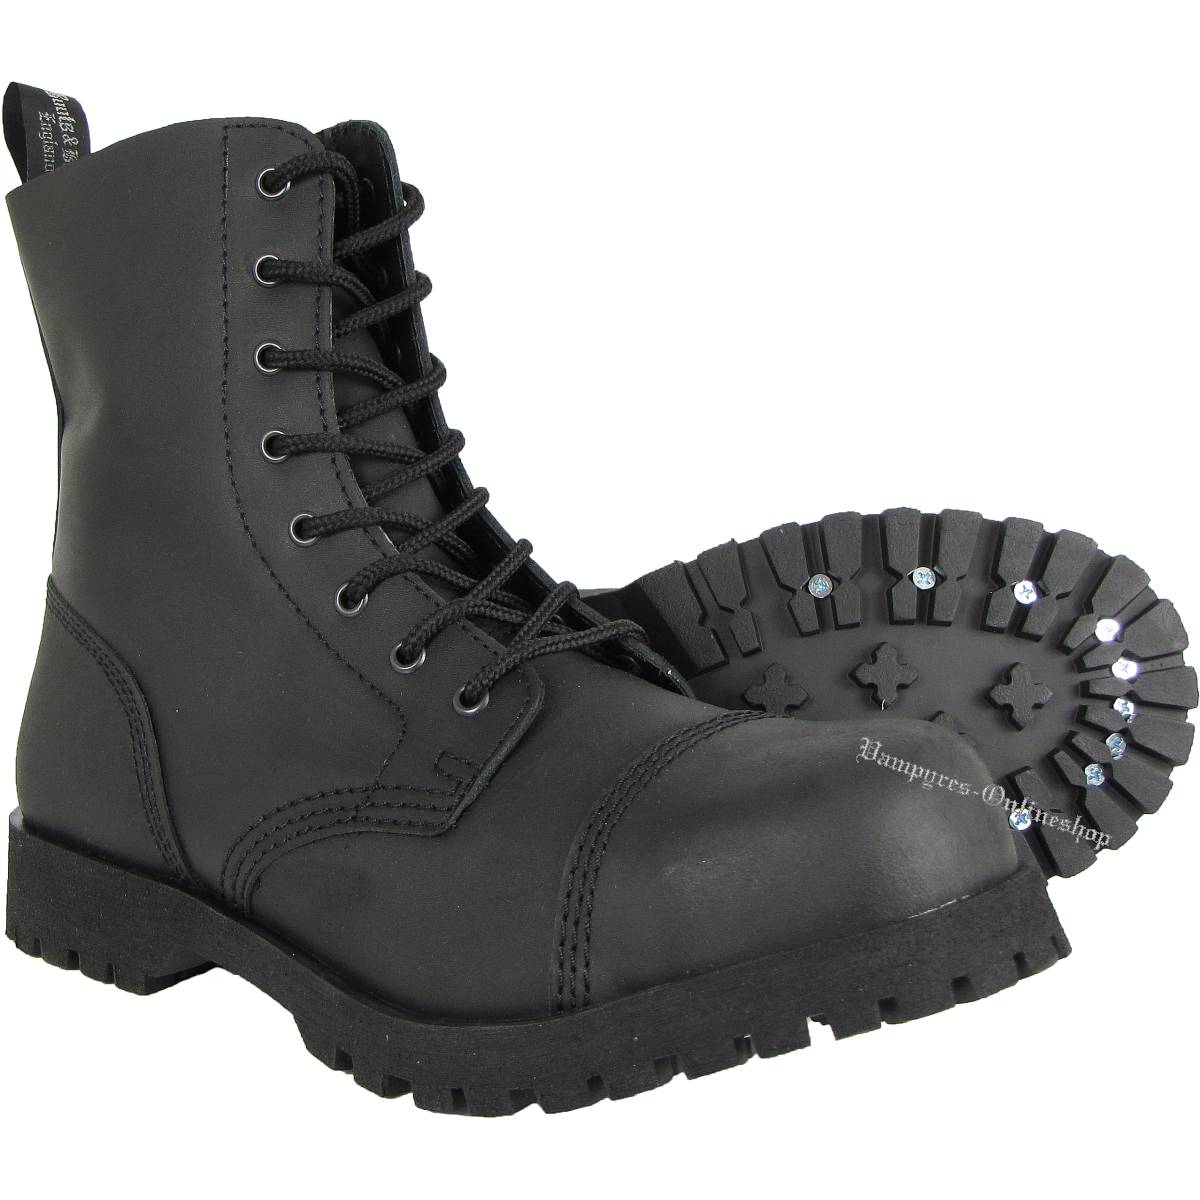 Boots & Braces easy 10 Loch monochrom Black on Black Stiefel Rangers Schwarz 